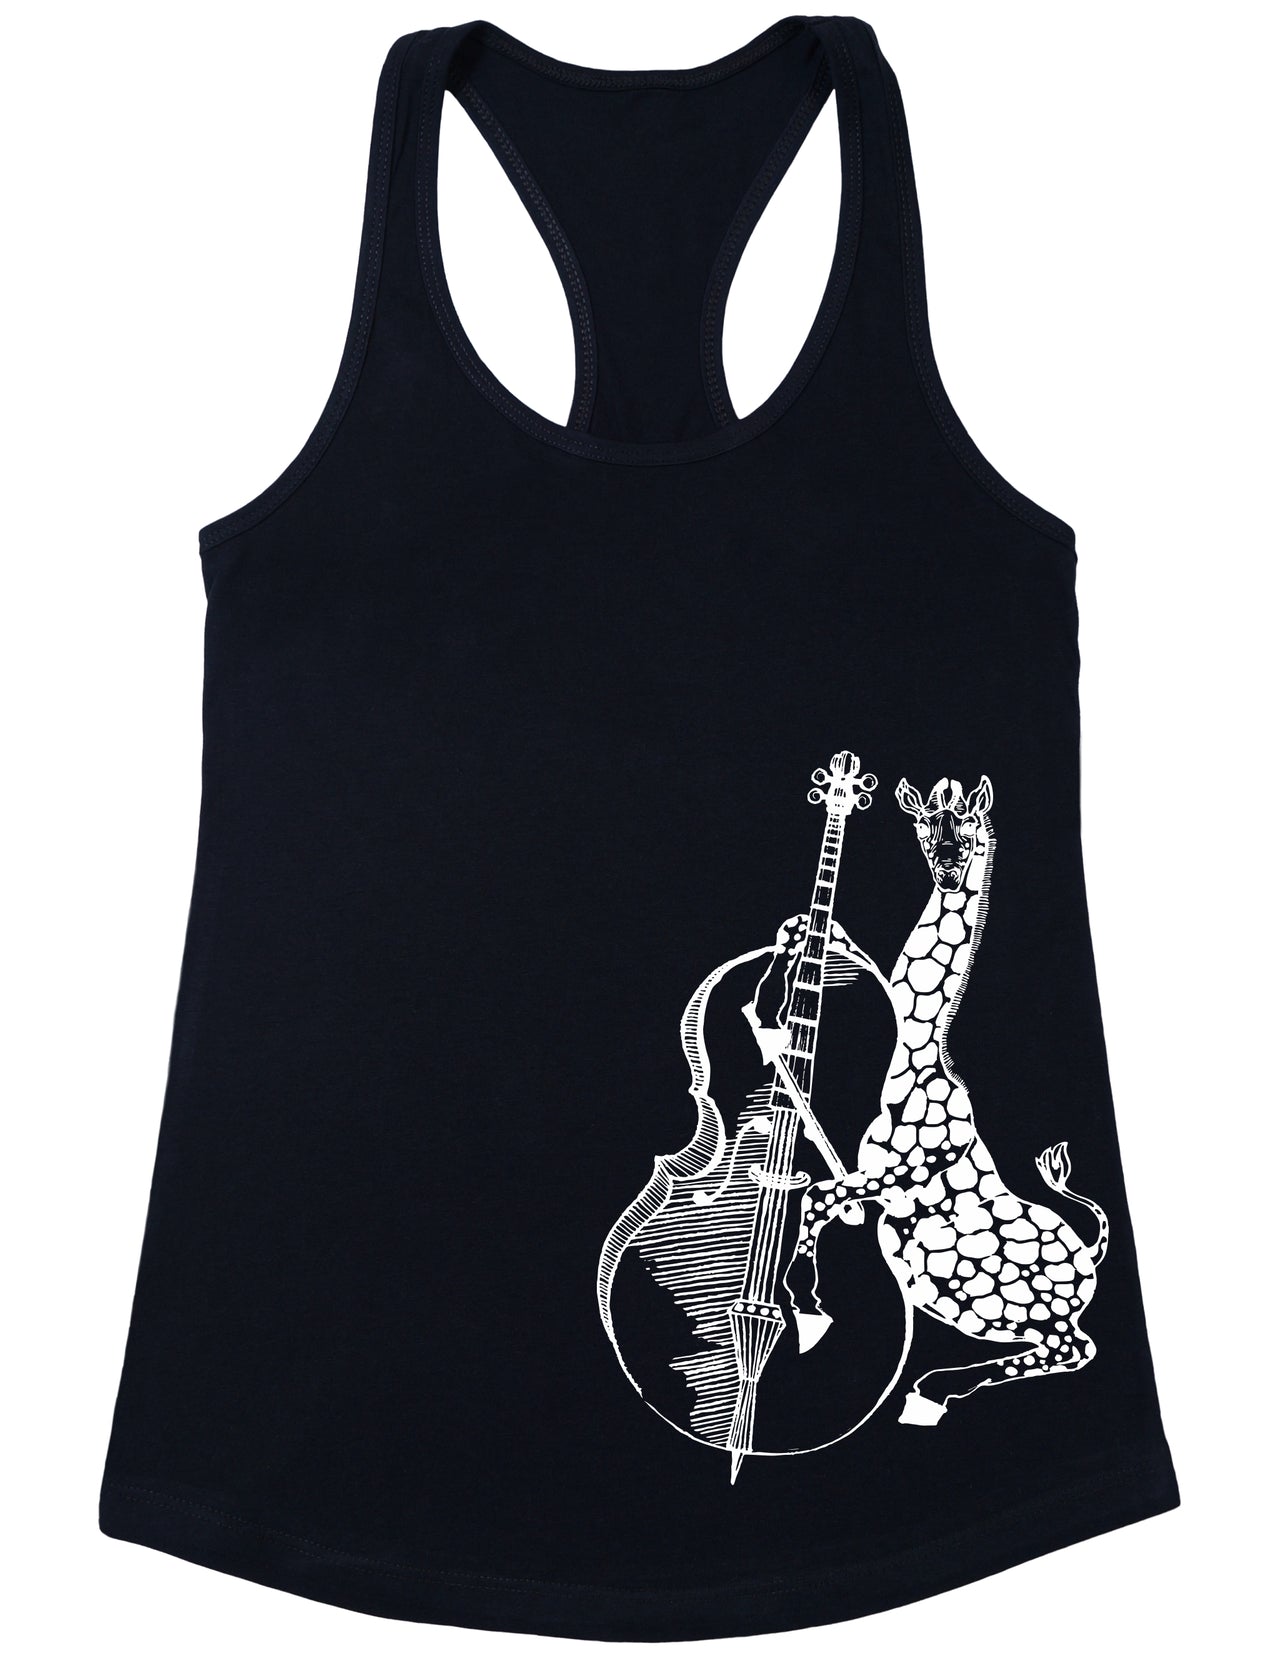 SEEMBO Giraffe Playing Cello Women's Poly-Cotton Tank Top Side Print